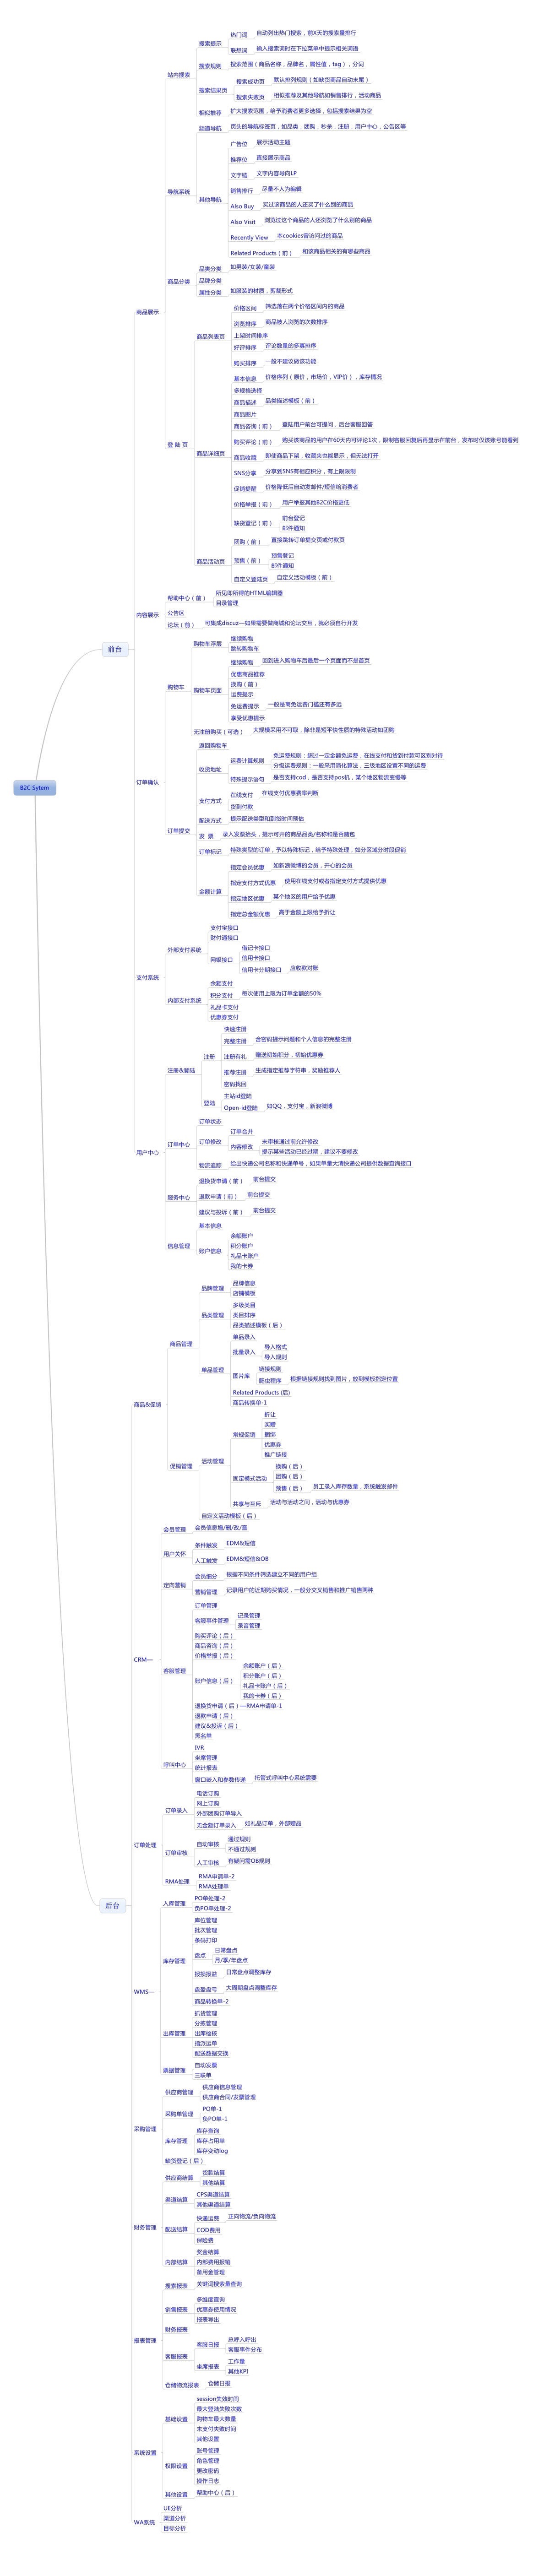 Java从零进阶自学路线图 - 文章图片